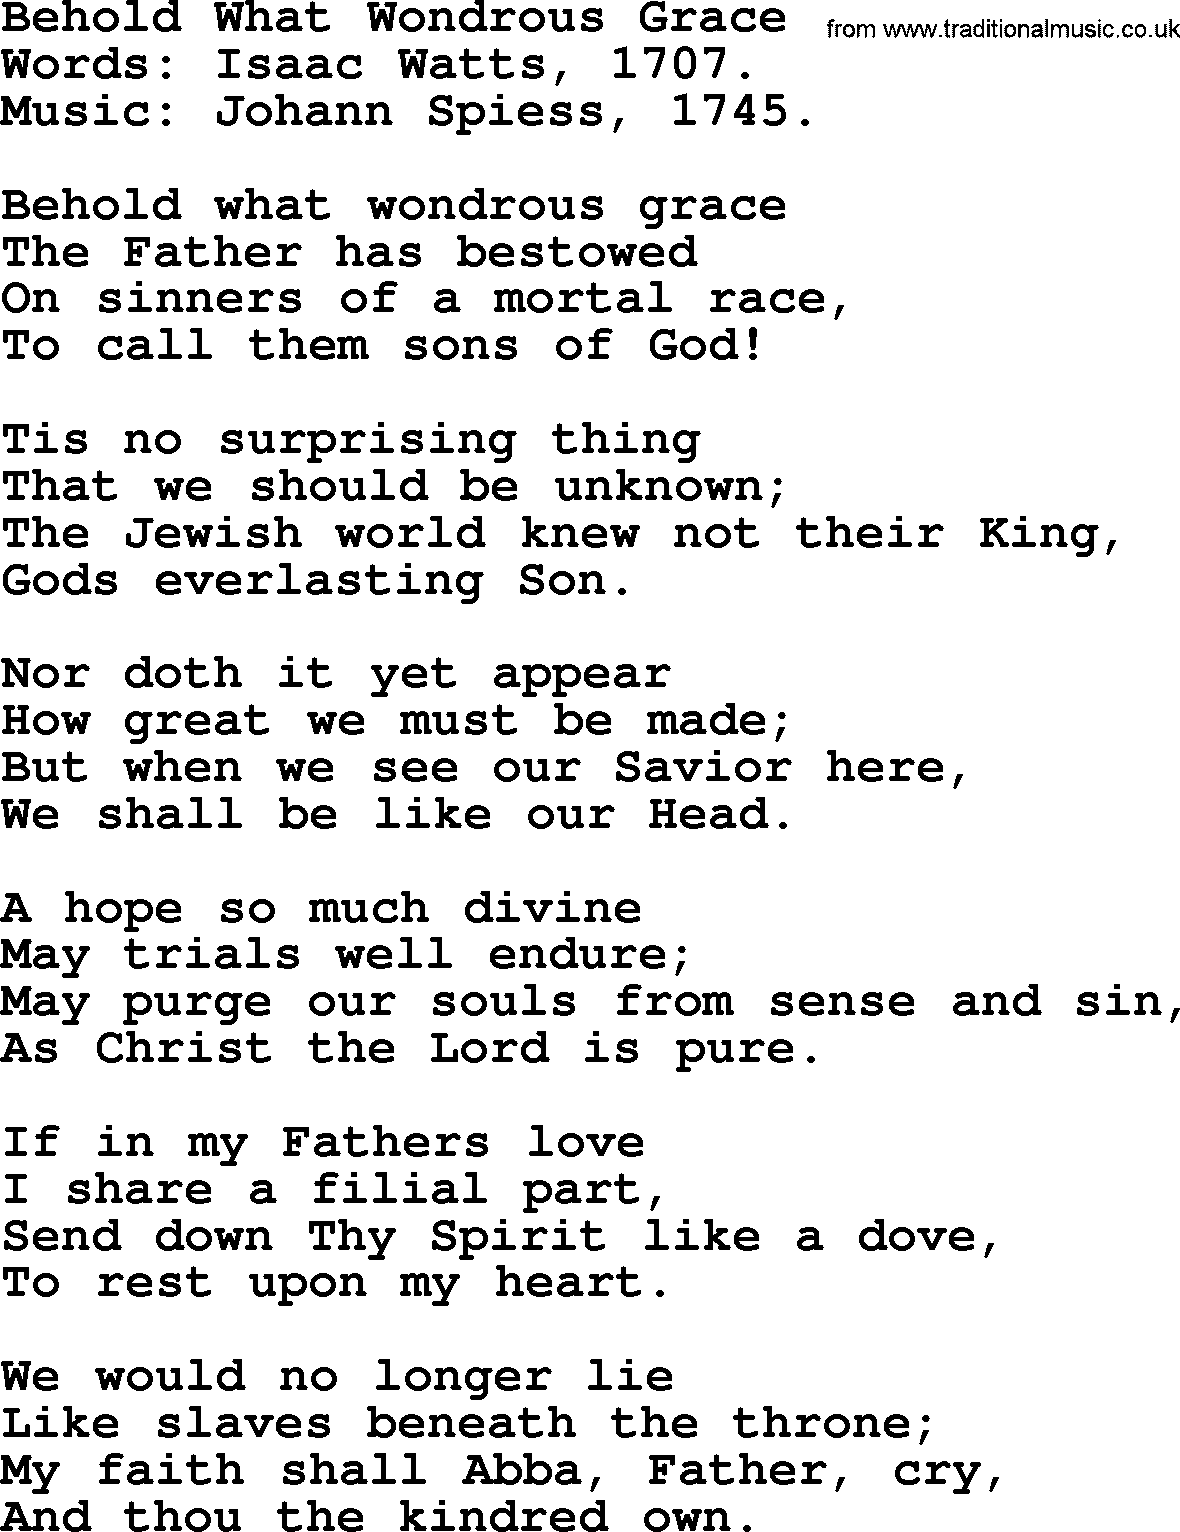 Isaac Watts Christian hymn: Behold What Wondrous Grace- lyricss